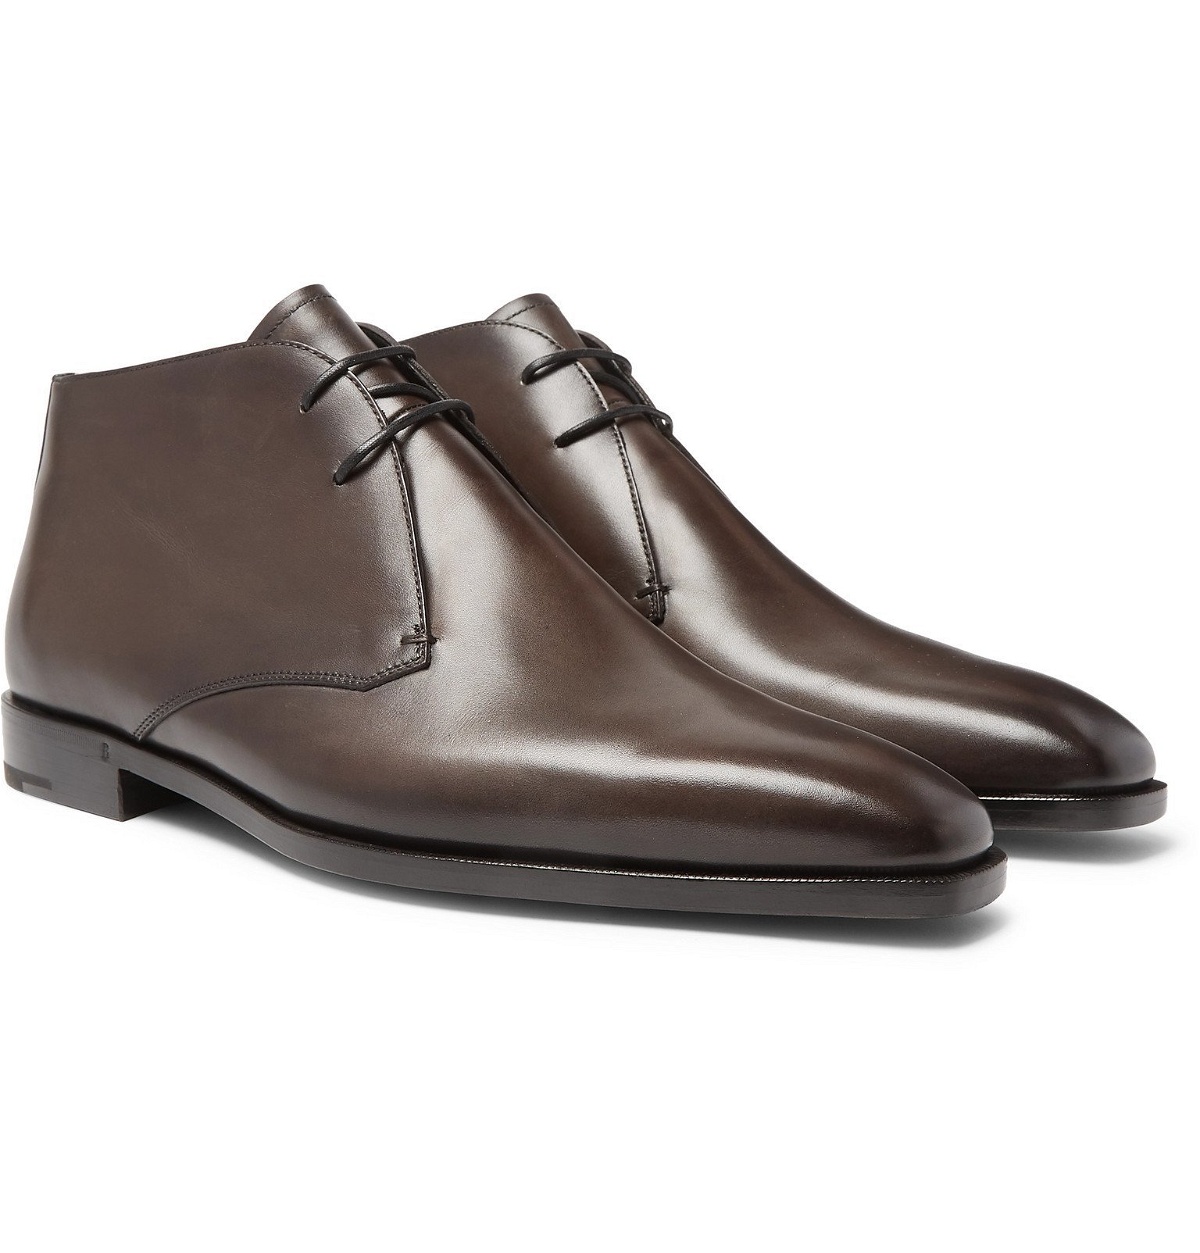 Berluti - Shearling-Lined Leather Boots - Men - Black Berluti